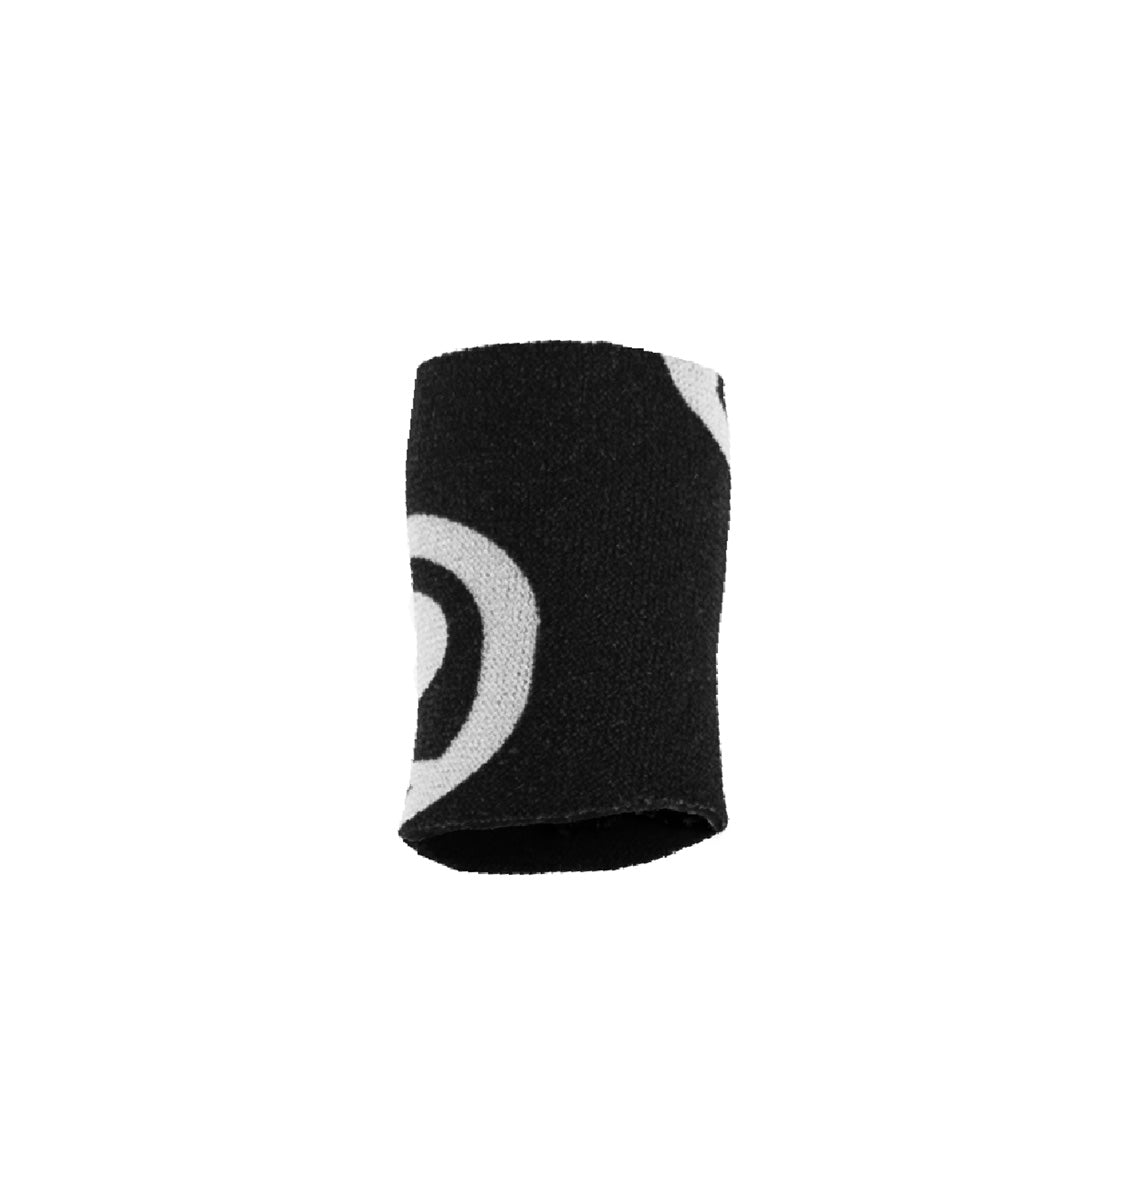 108106-01 Rehband Rx Thumb Sleeves Black 1.5mm - Side